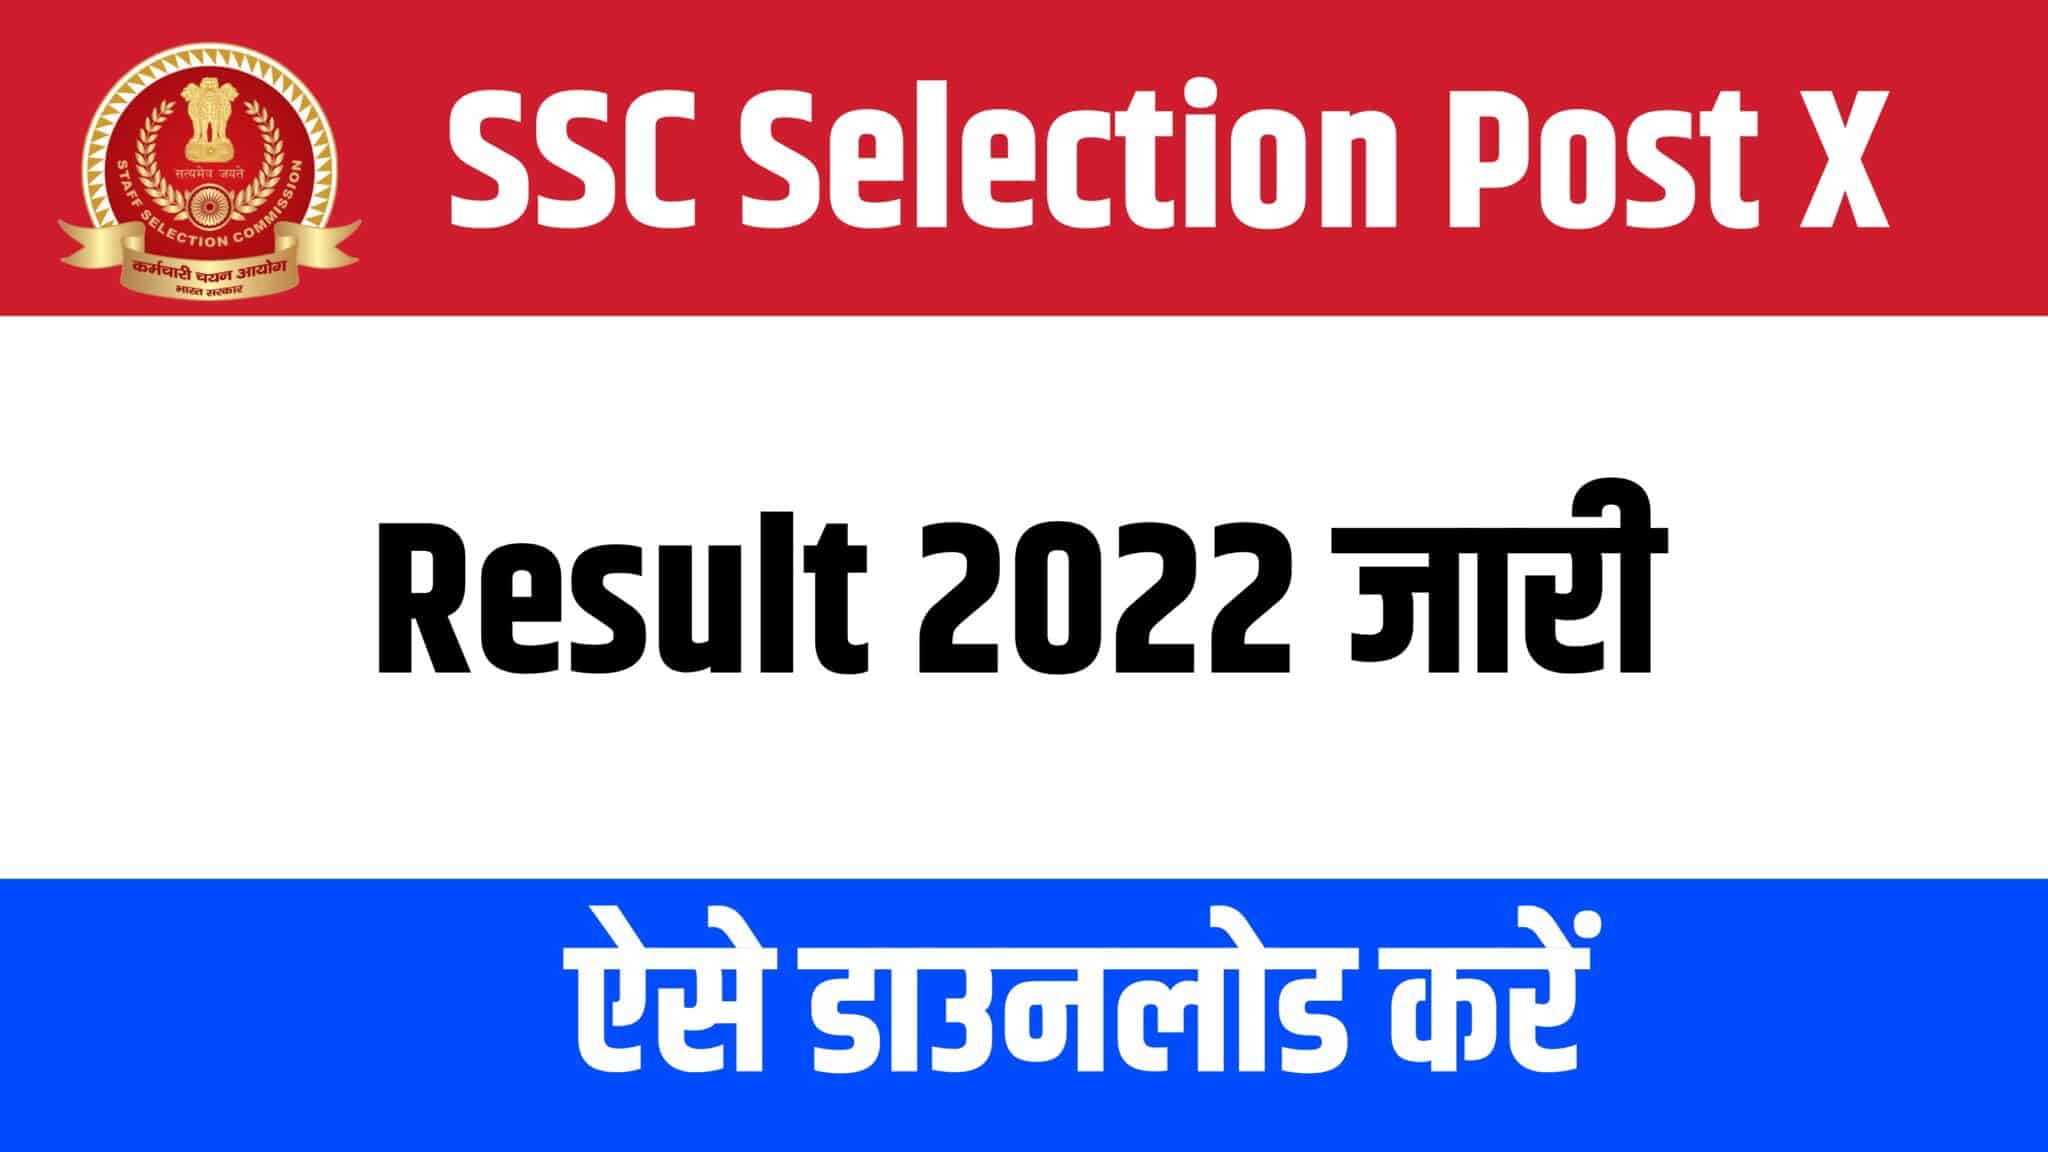 SSC Selection Post X Result 2022 | एसएससी सिलेक्शन पोस्ट 10 रिजल्ट जारी